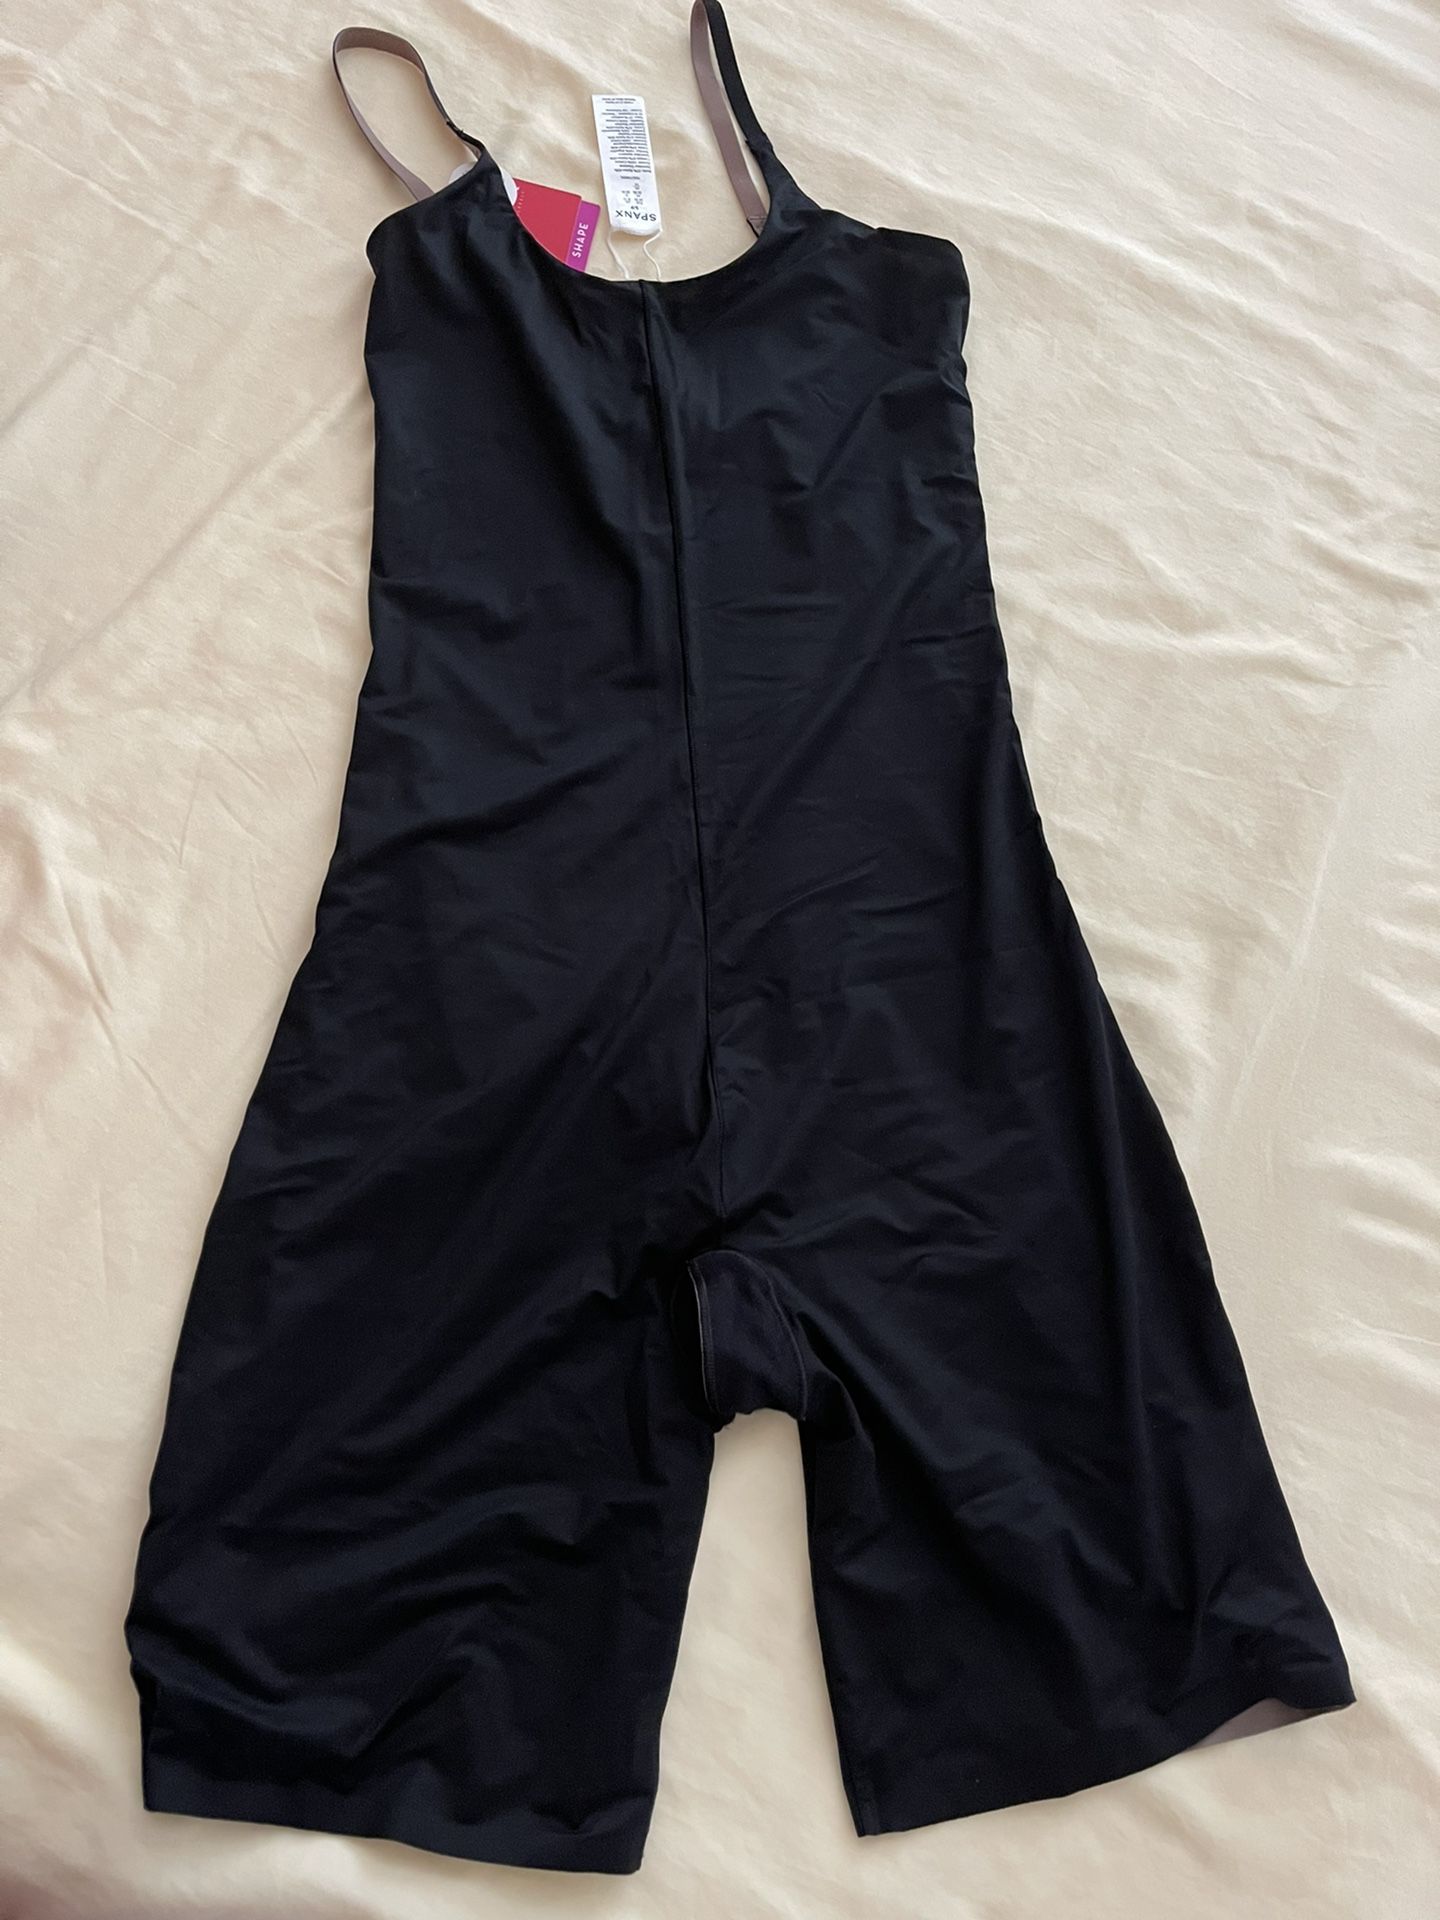 SPANX reversible Bodysuit Black/taupe